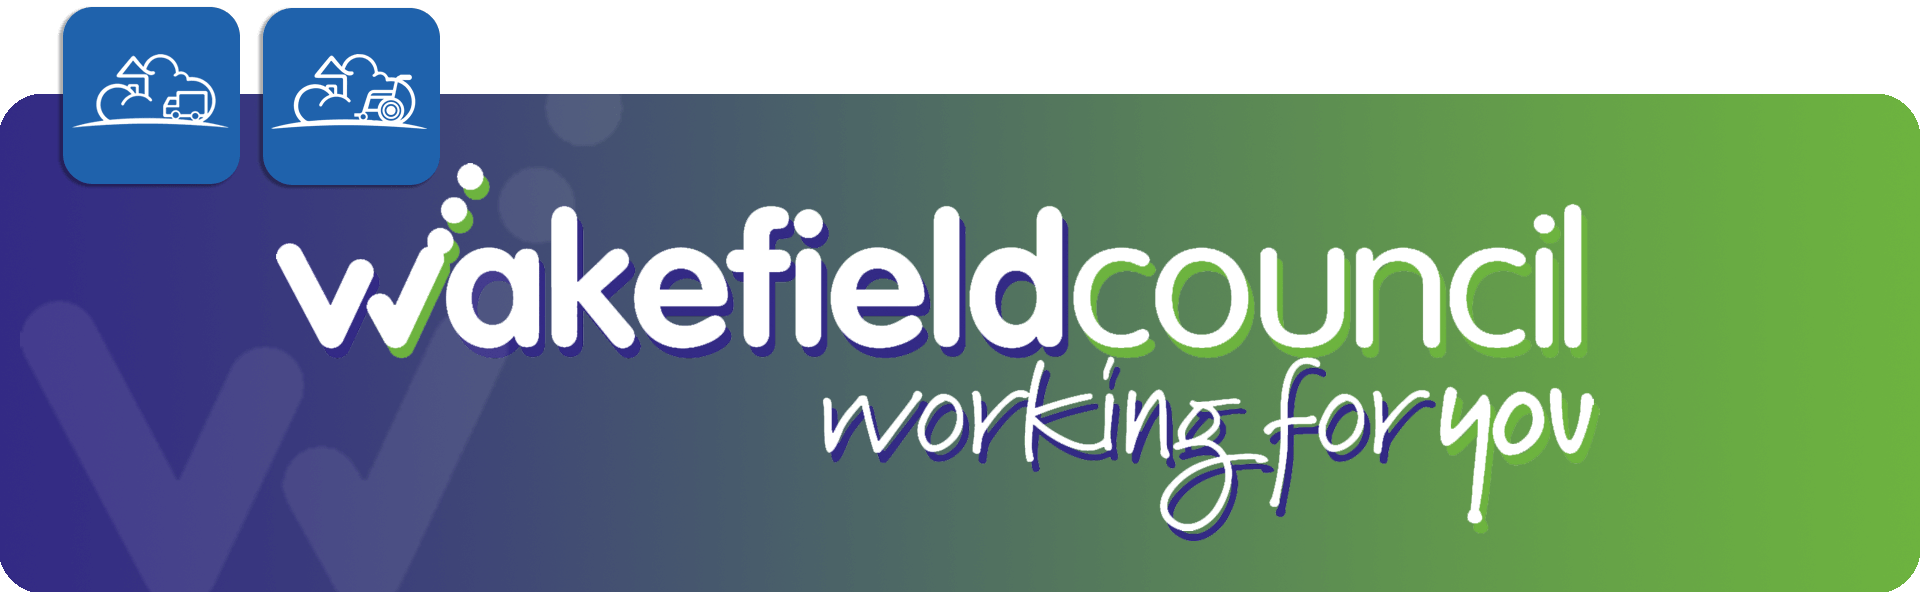 wakefield council logo